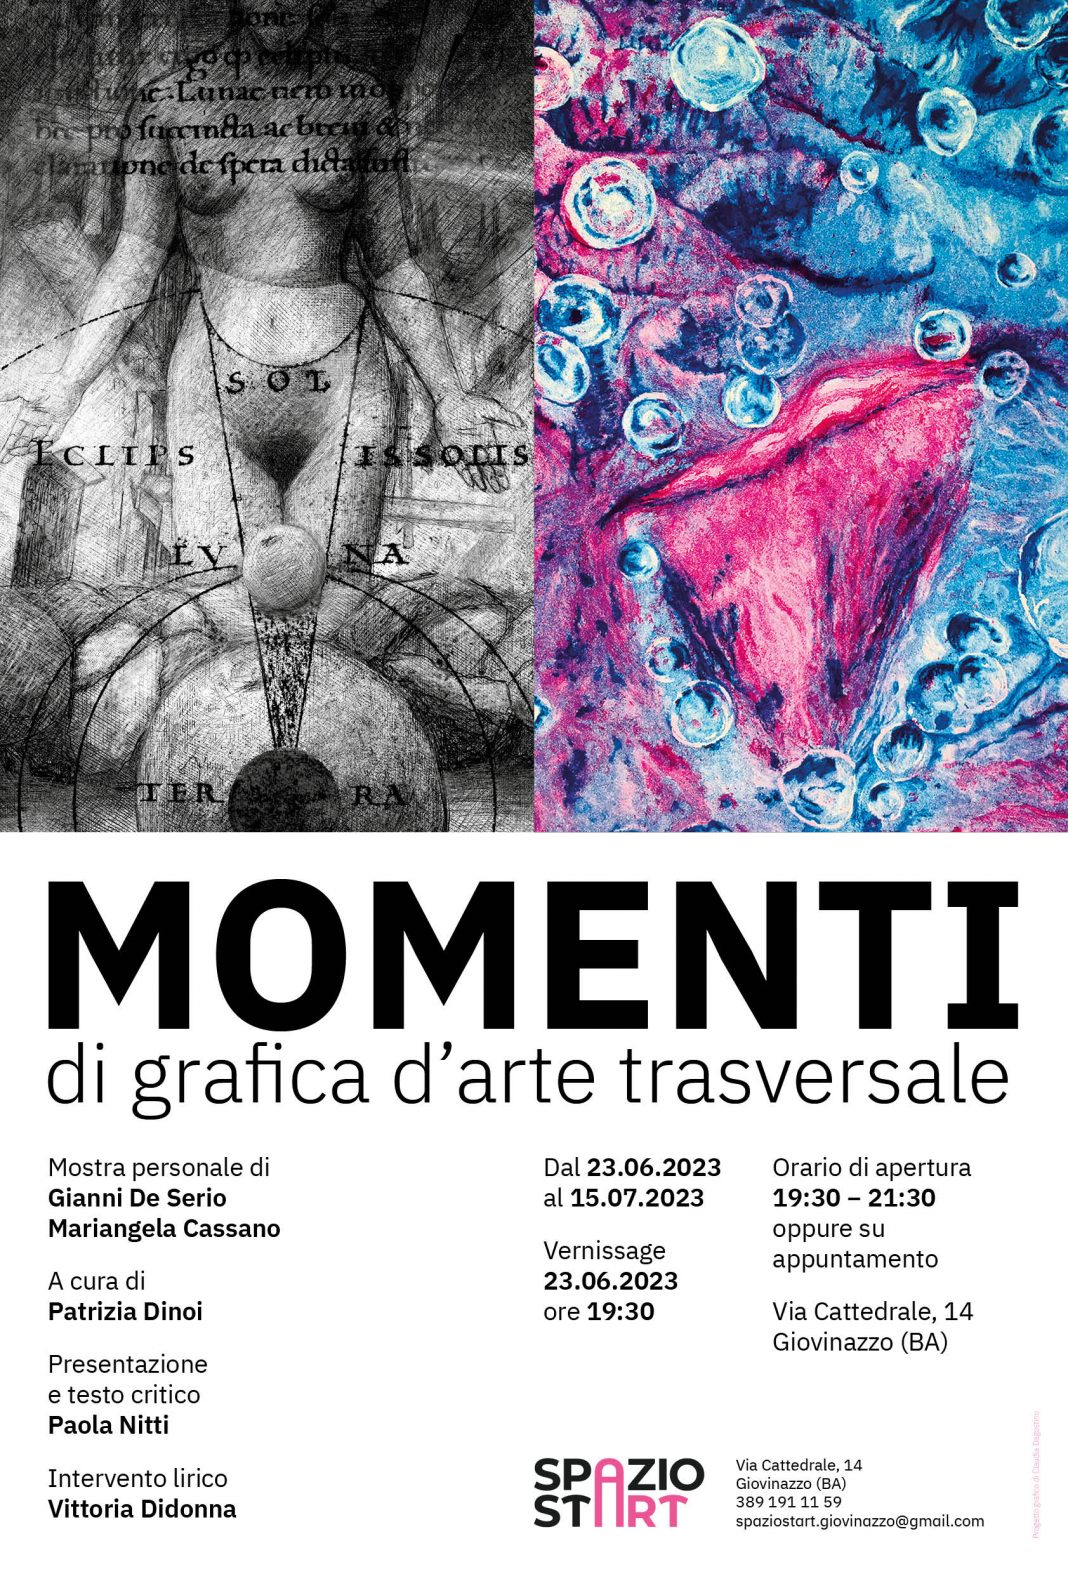 Gianni De Serio / Mariangela Cassano – Momenti di Grafica d’Arte Trasversalehttps://www.exibart.com/repository/media/formidable/11/img/3f0/Deserio-cassano-poster-1068x1574.jpg